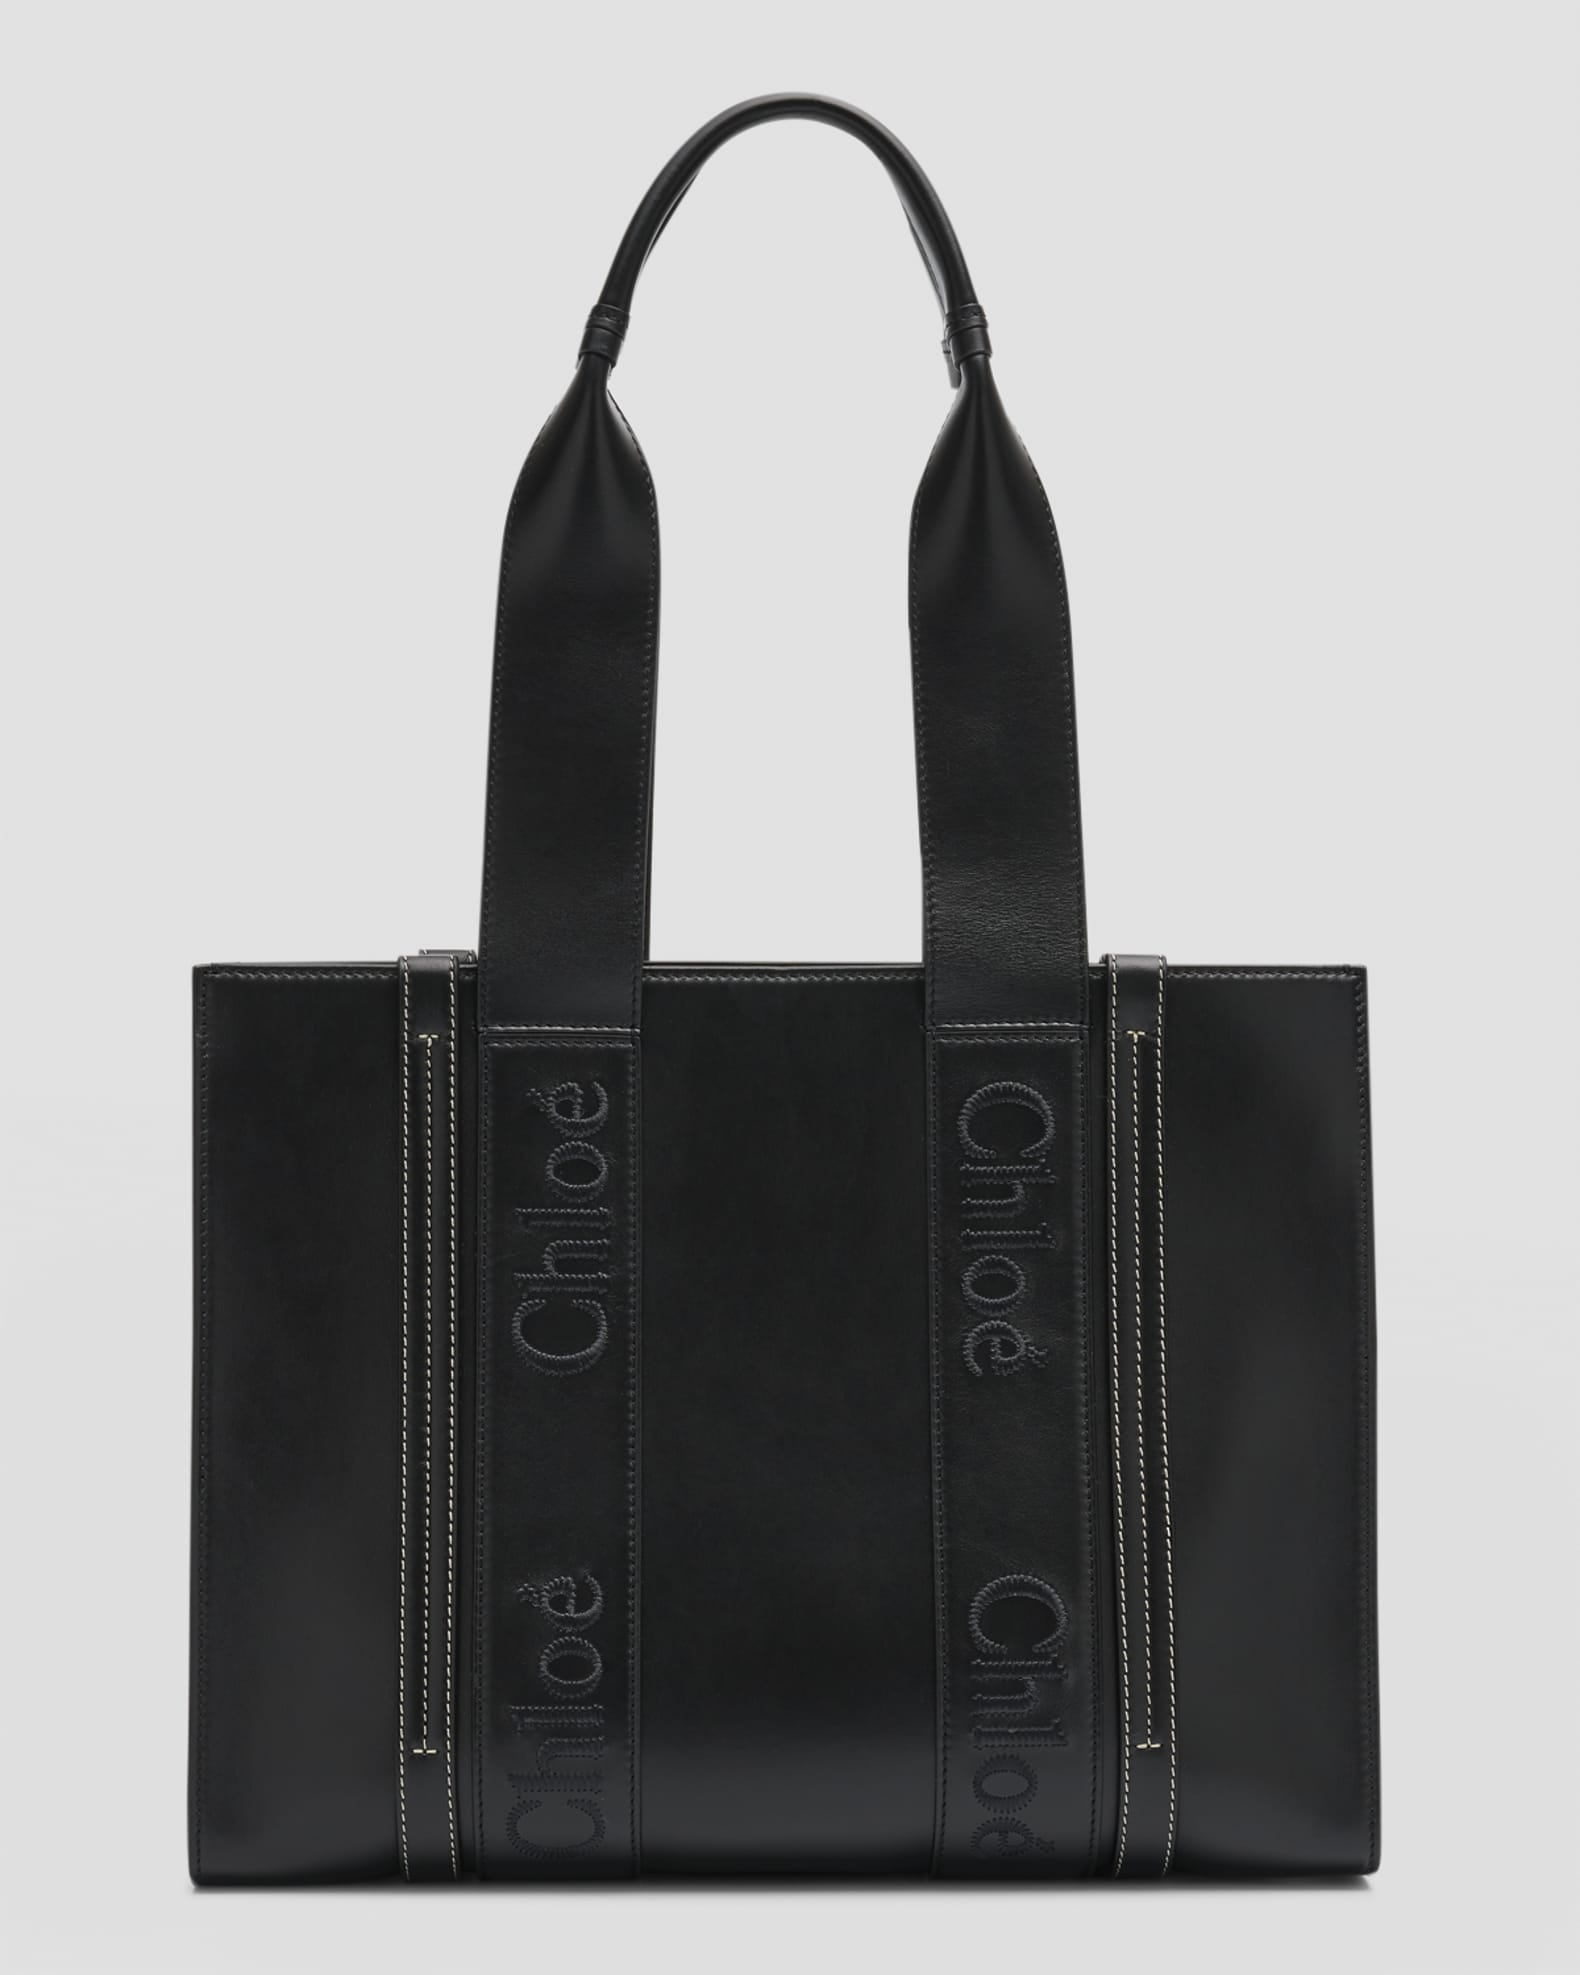 Chloe Woody Medium Tote Bag in Leather | Neiman Marcus